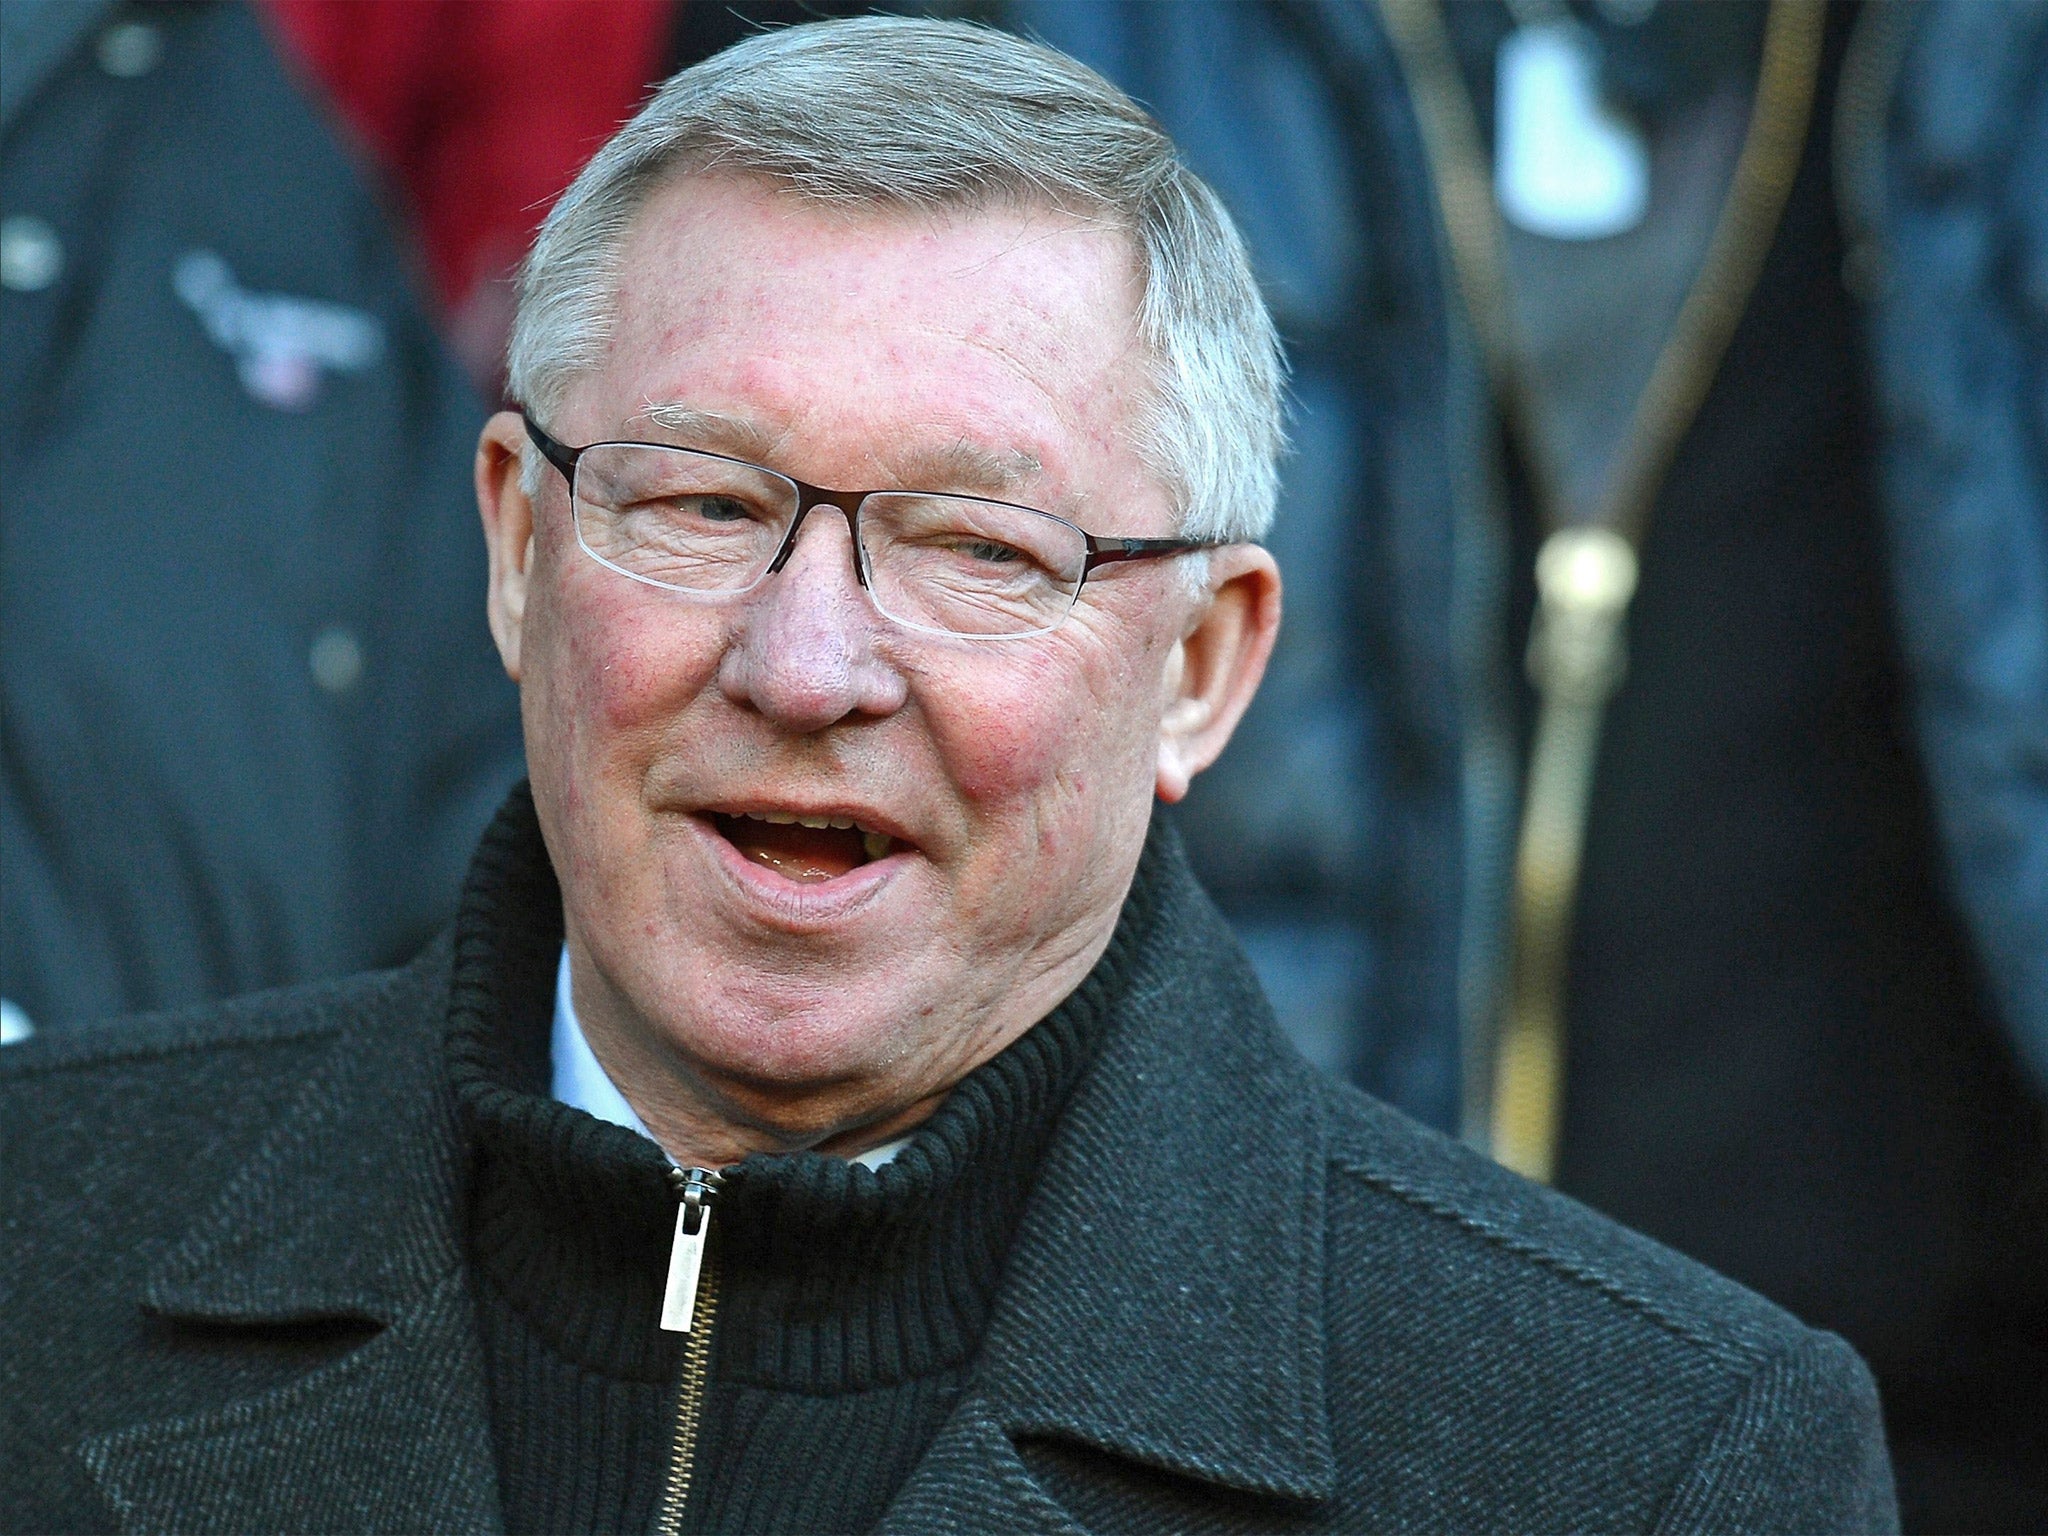 Ferguson said he was surprised at Newcastle's league position